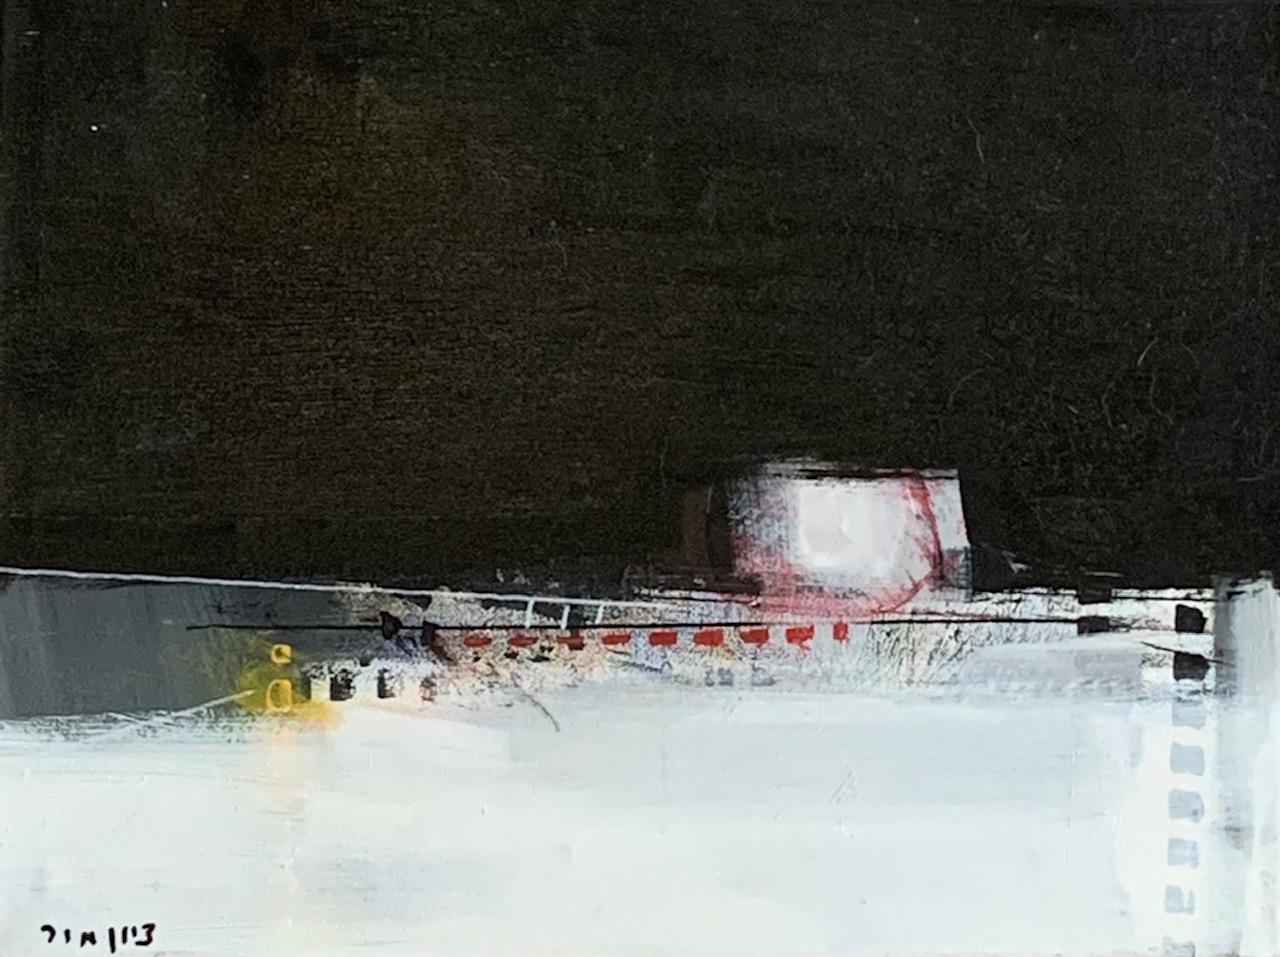 Zion Mor Landscape Painting - "Silent District" Black & White Minimalist Abstract Expressionist Landscape